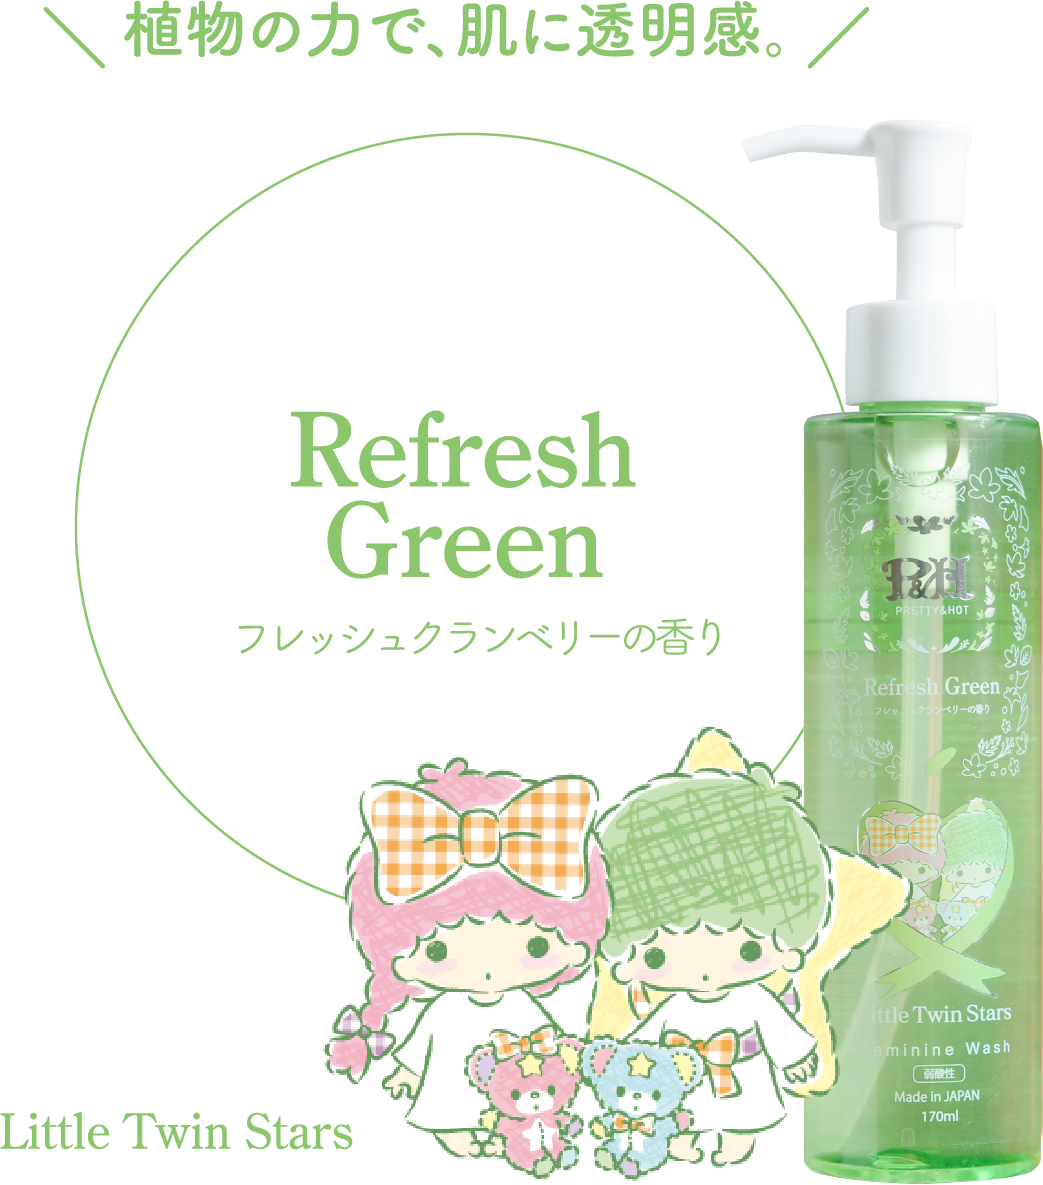 Refesh Green